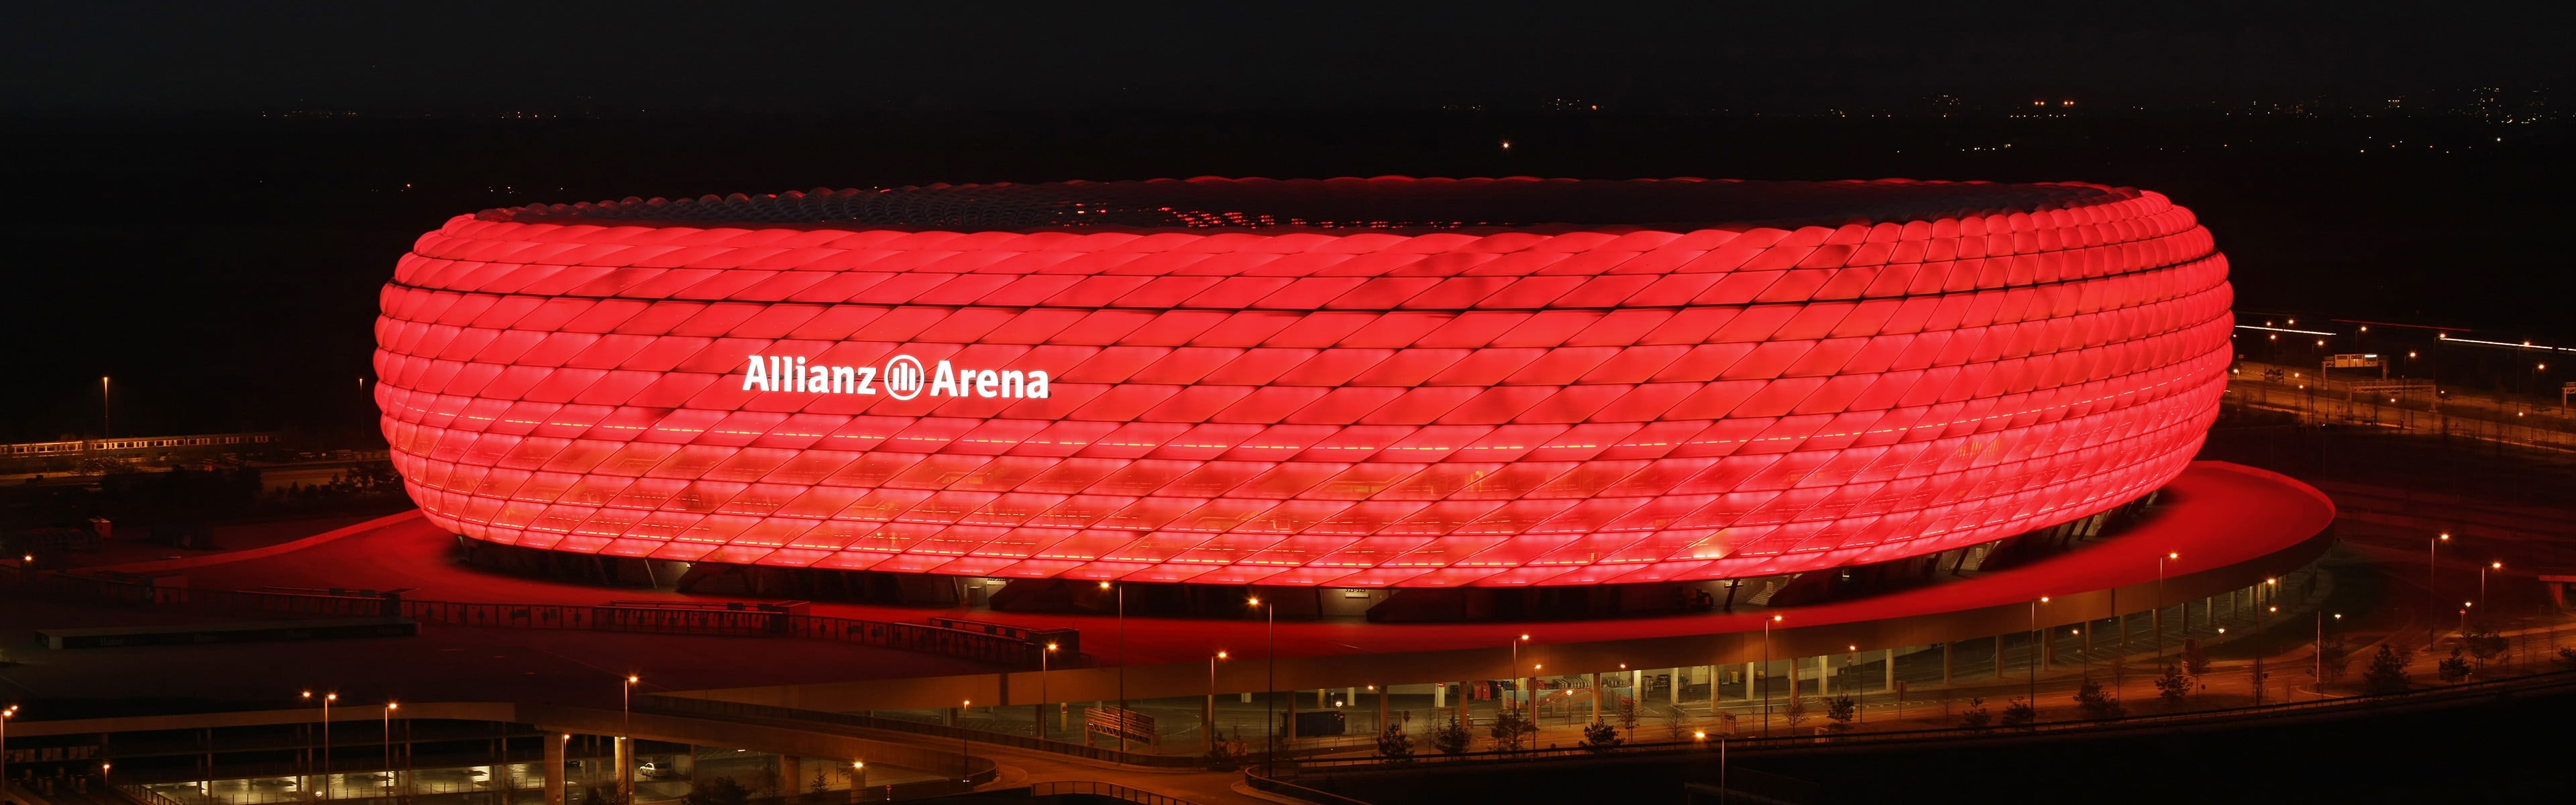 540x960 resolution | Allianz Arena, Germany, Allianz Arena , stadium ...